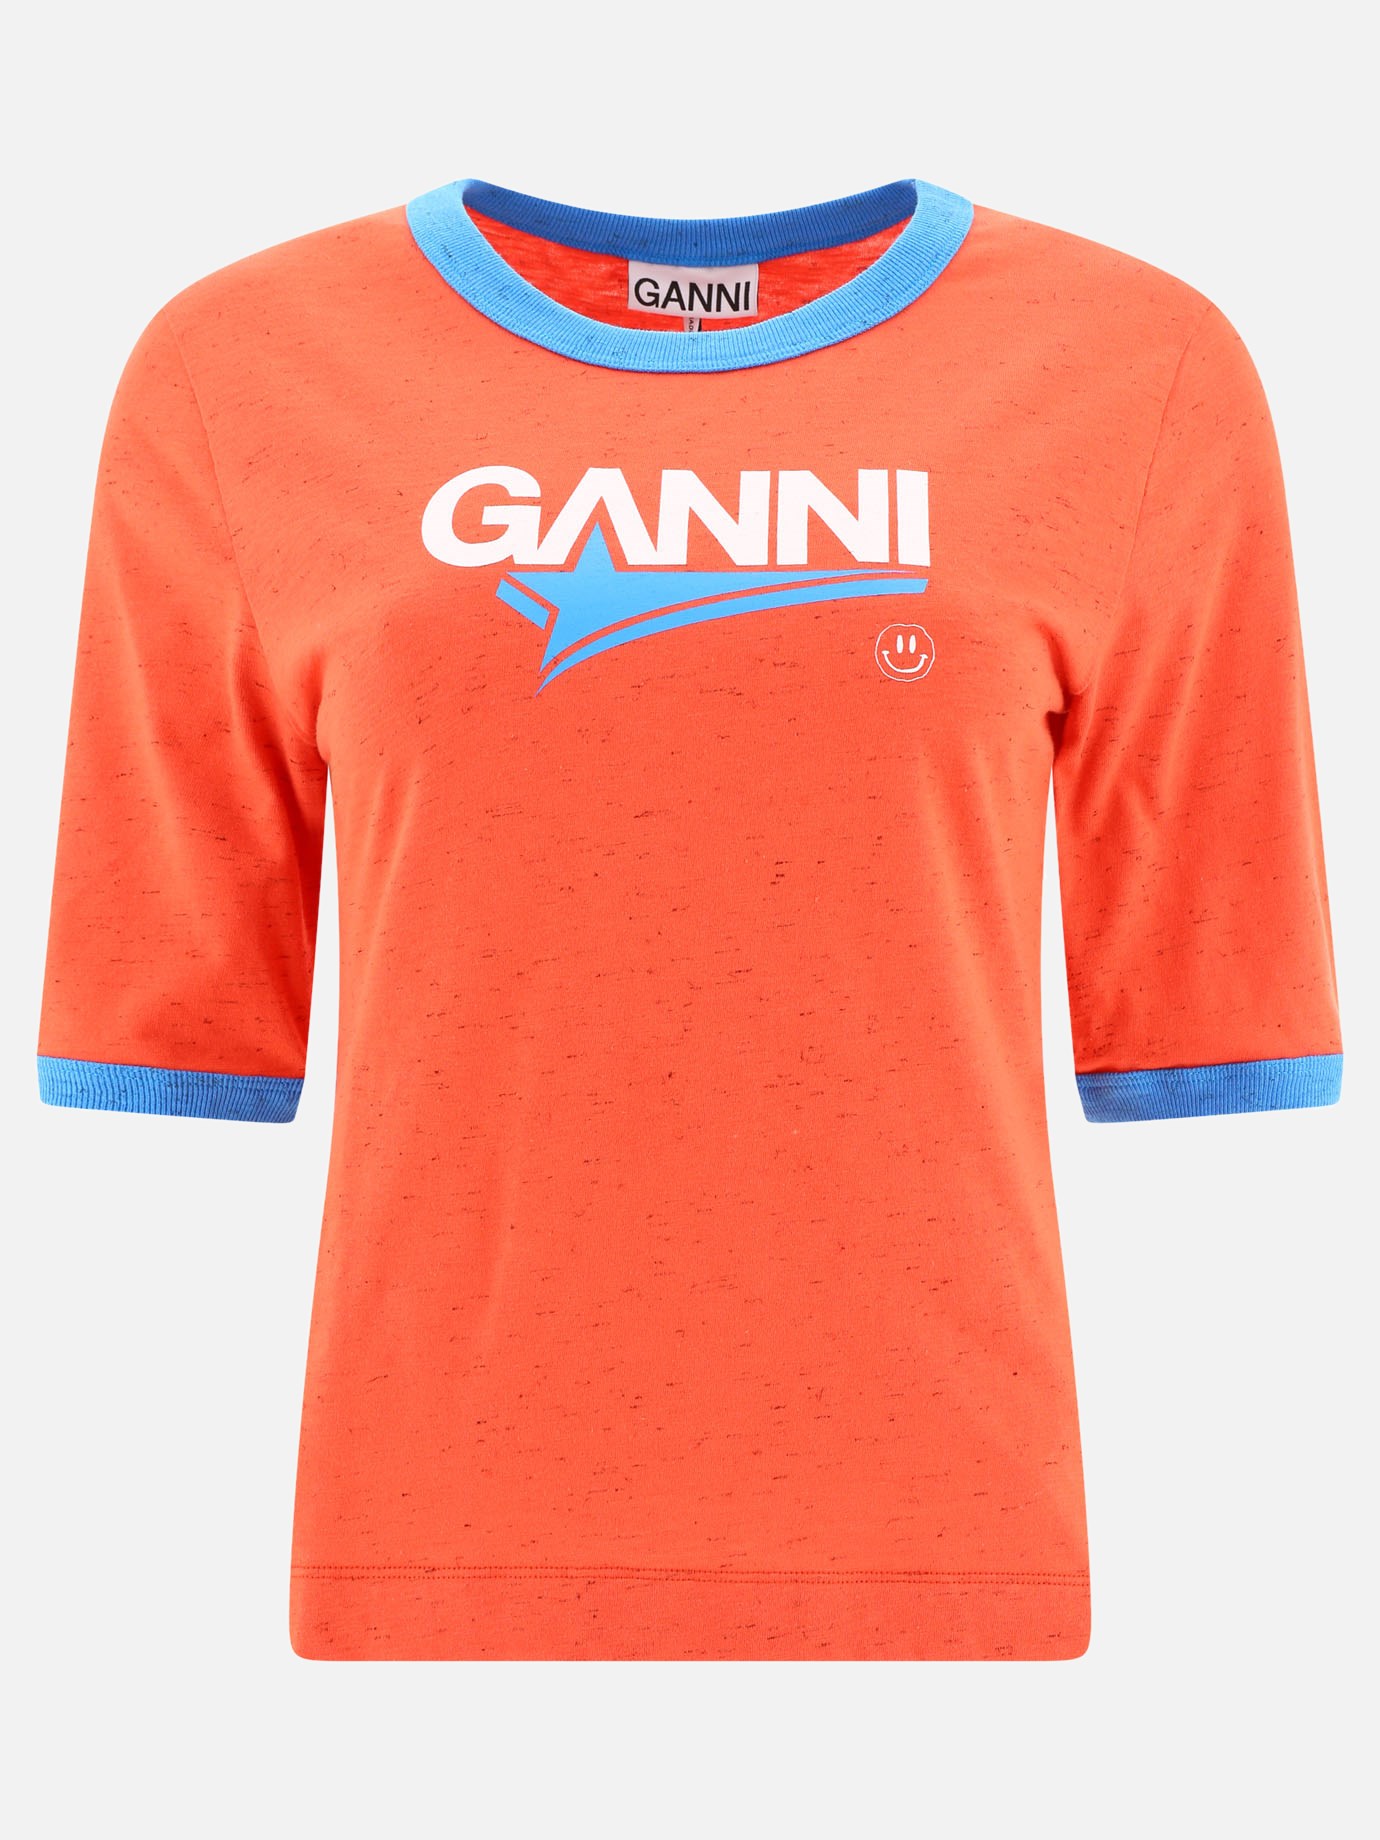  Graphic  t-shirtby Ganni - 4